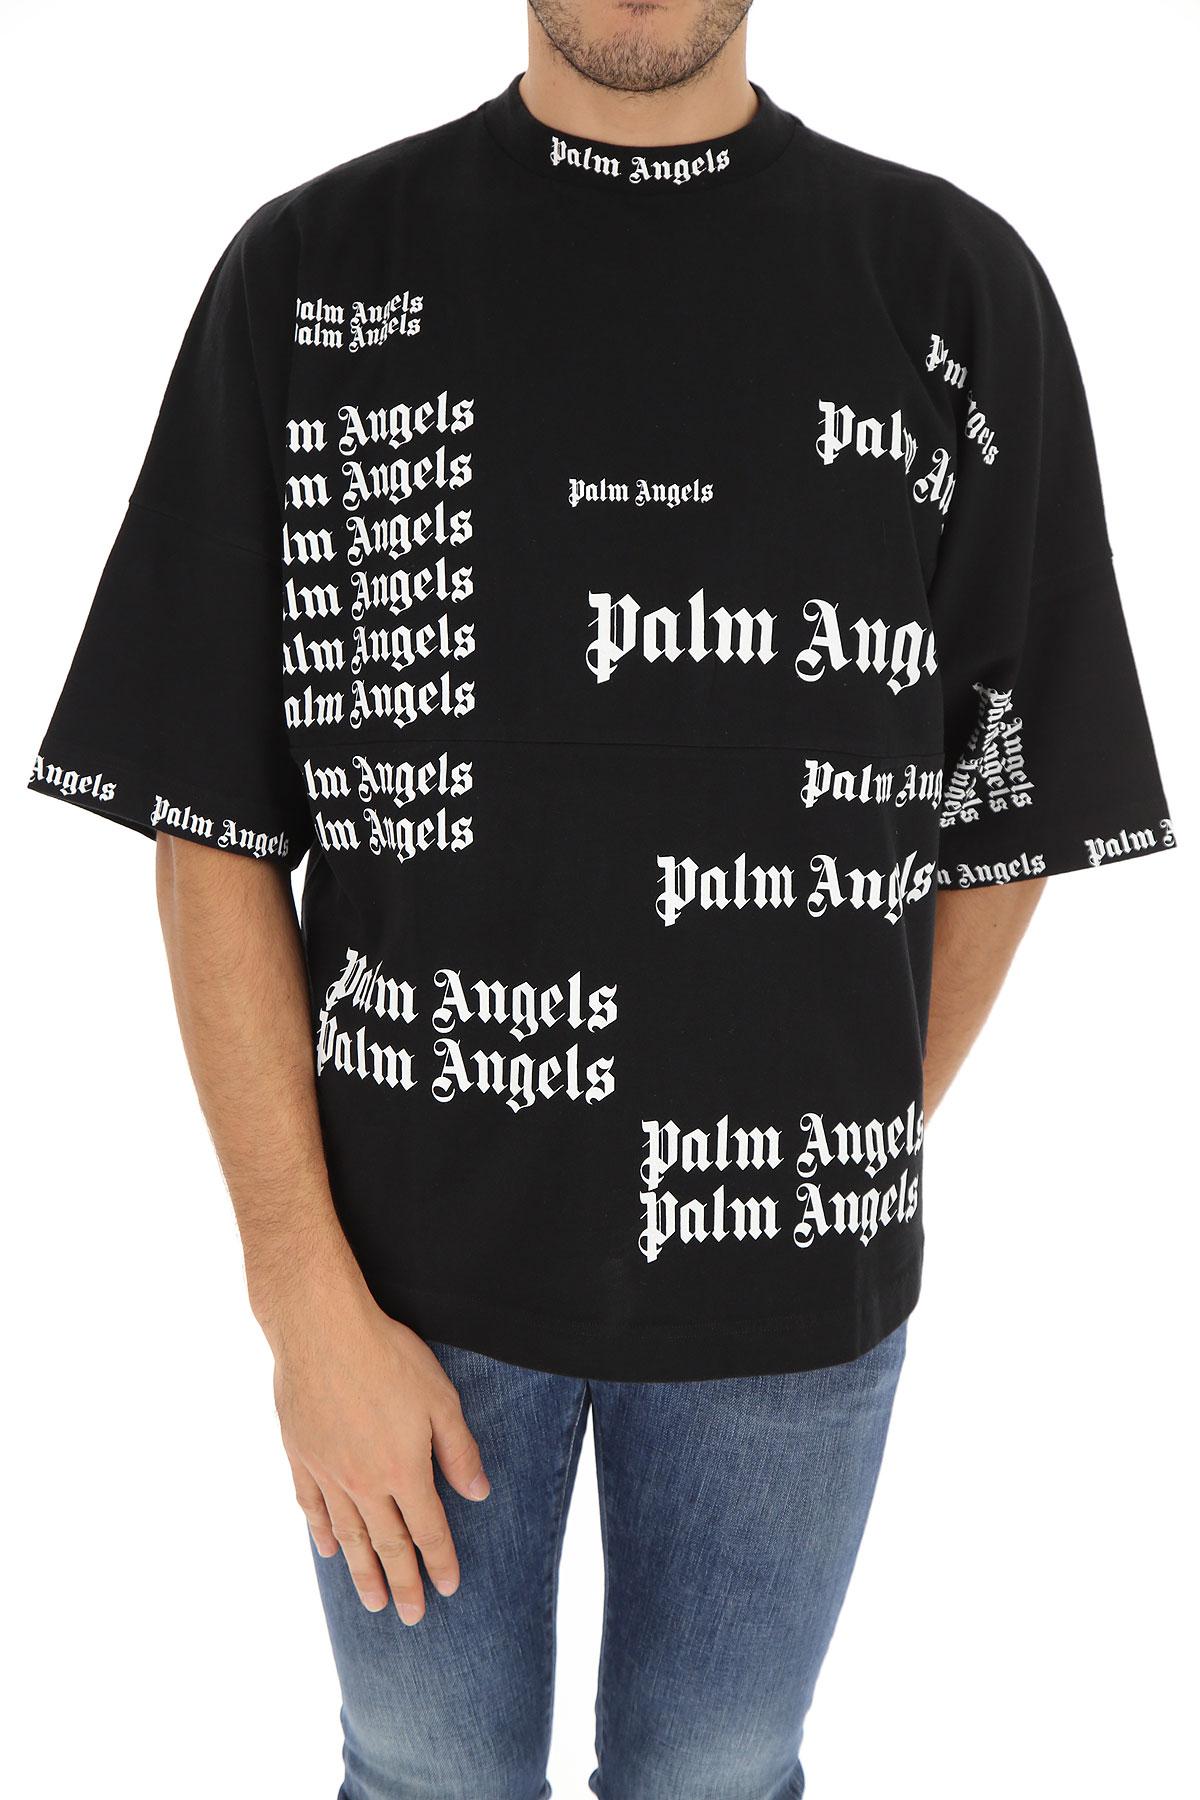 palm angel shirt